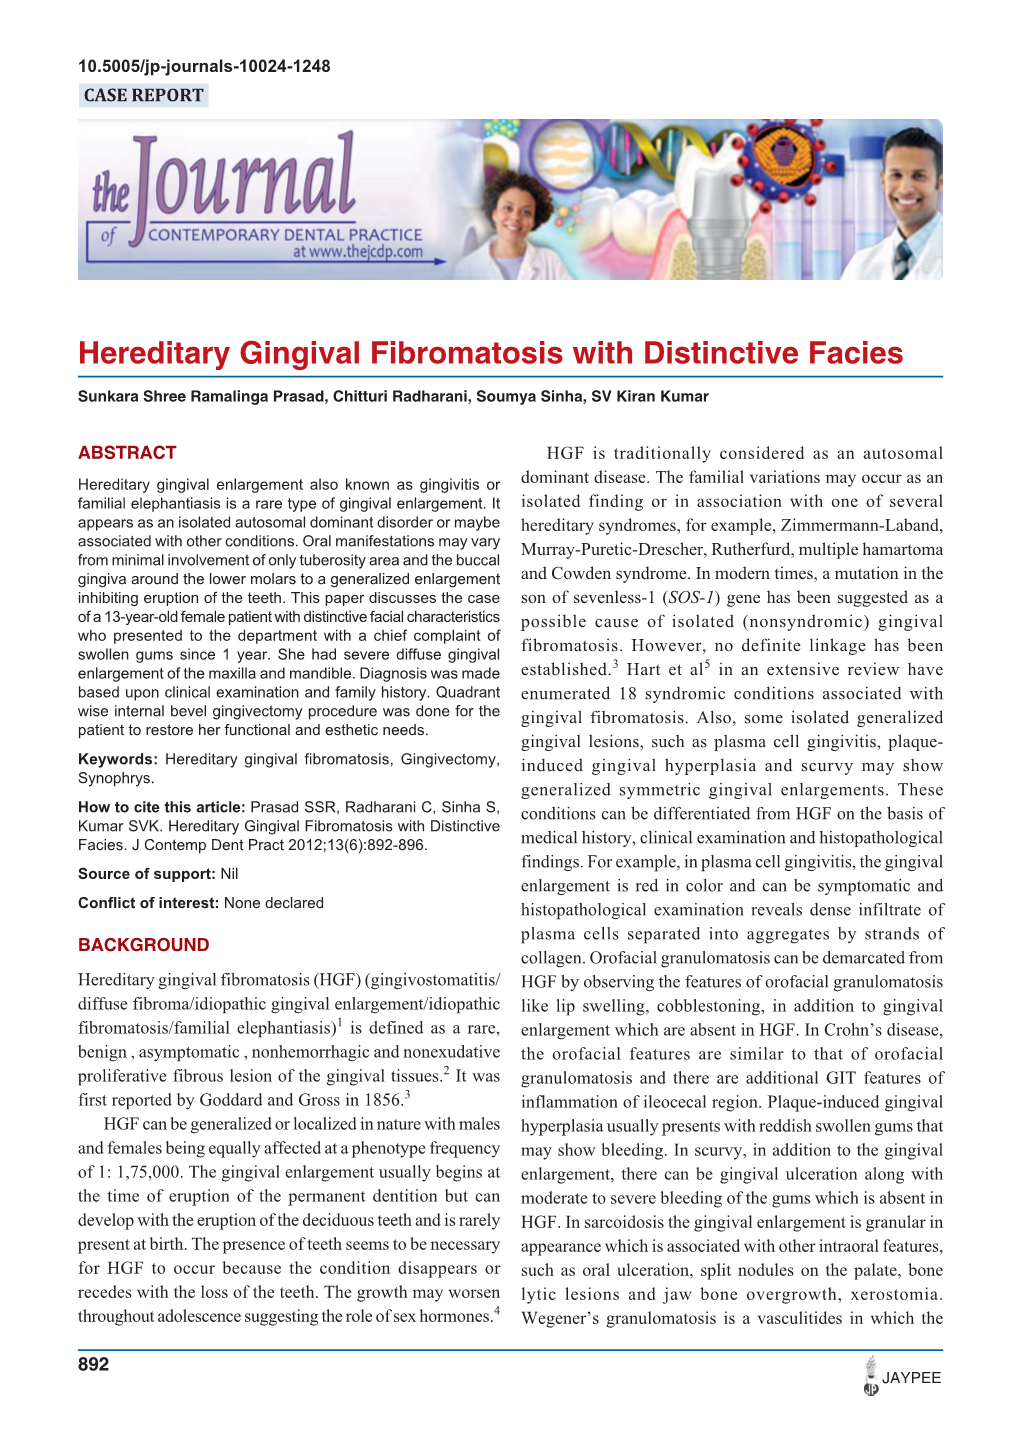 Hereditary Gingival Fibromatosis with Distinctive Facies